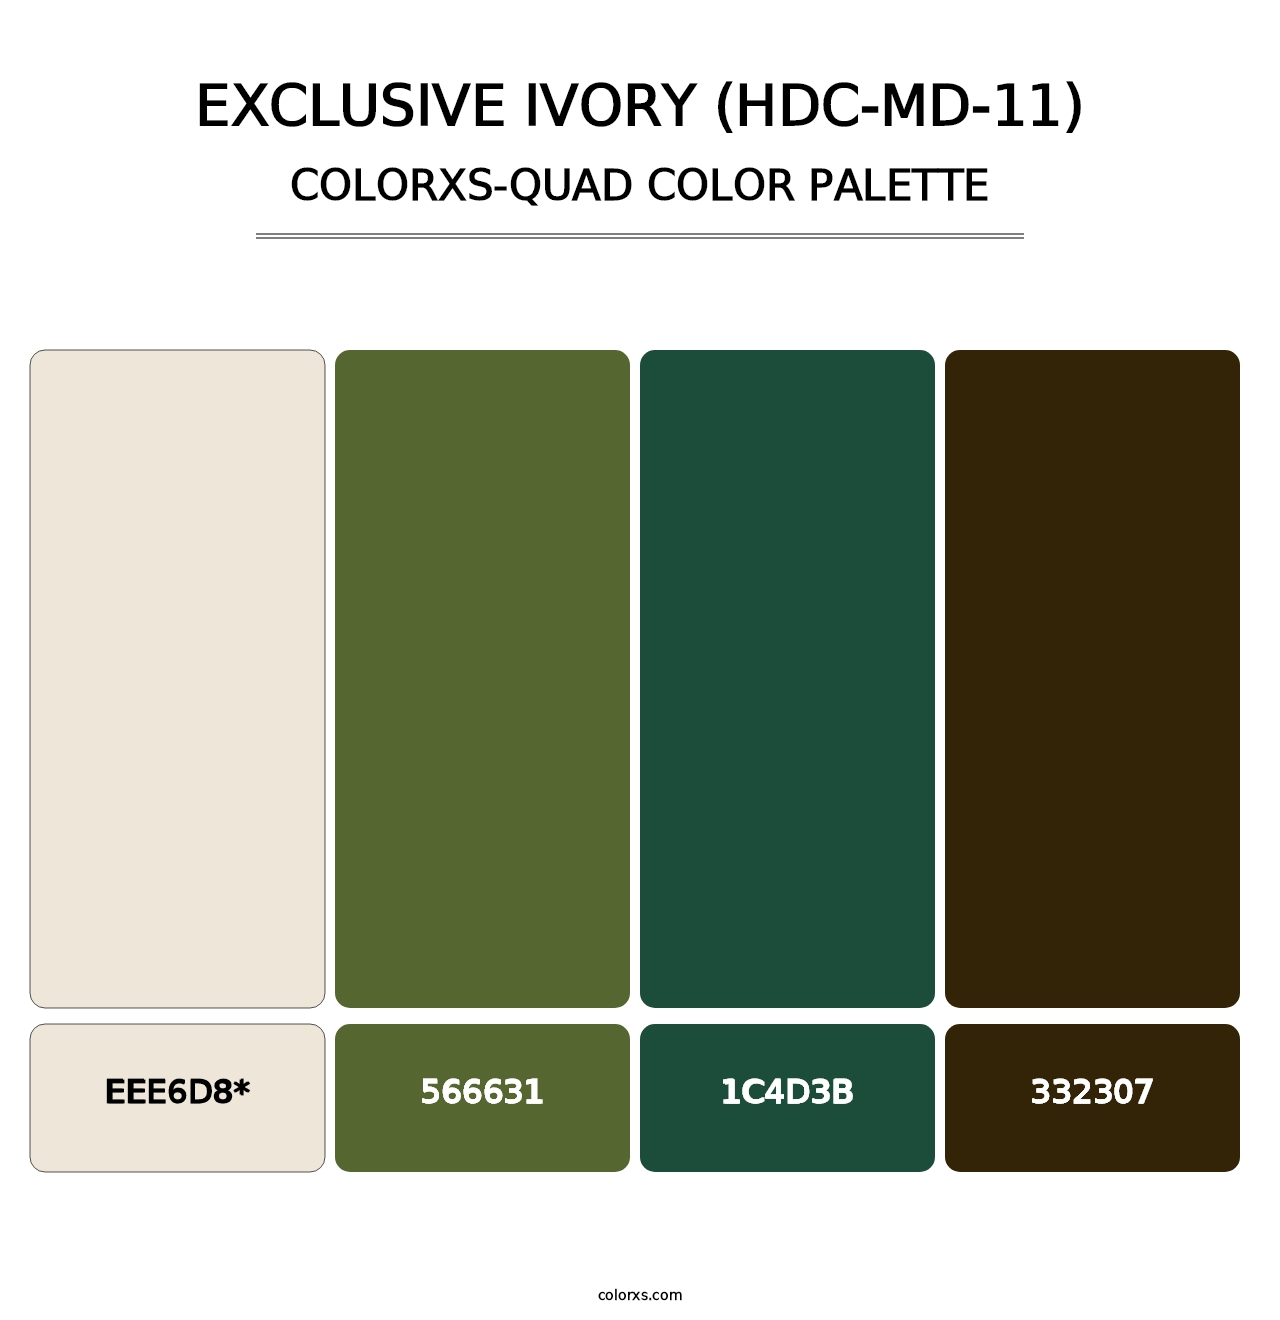 Exclusive Ivory (HDC-MD-11) - Colorxs Quad Palette